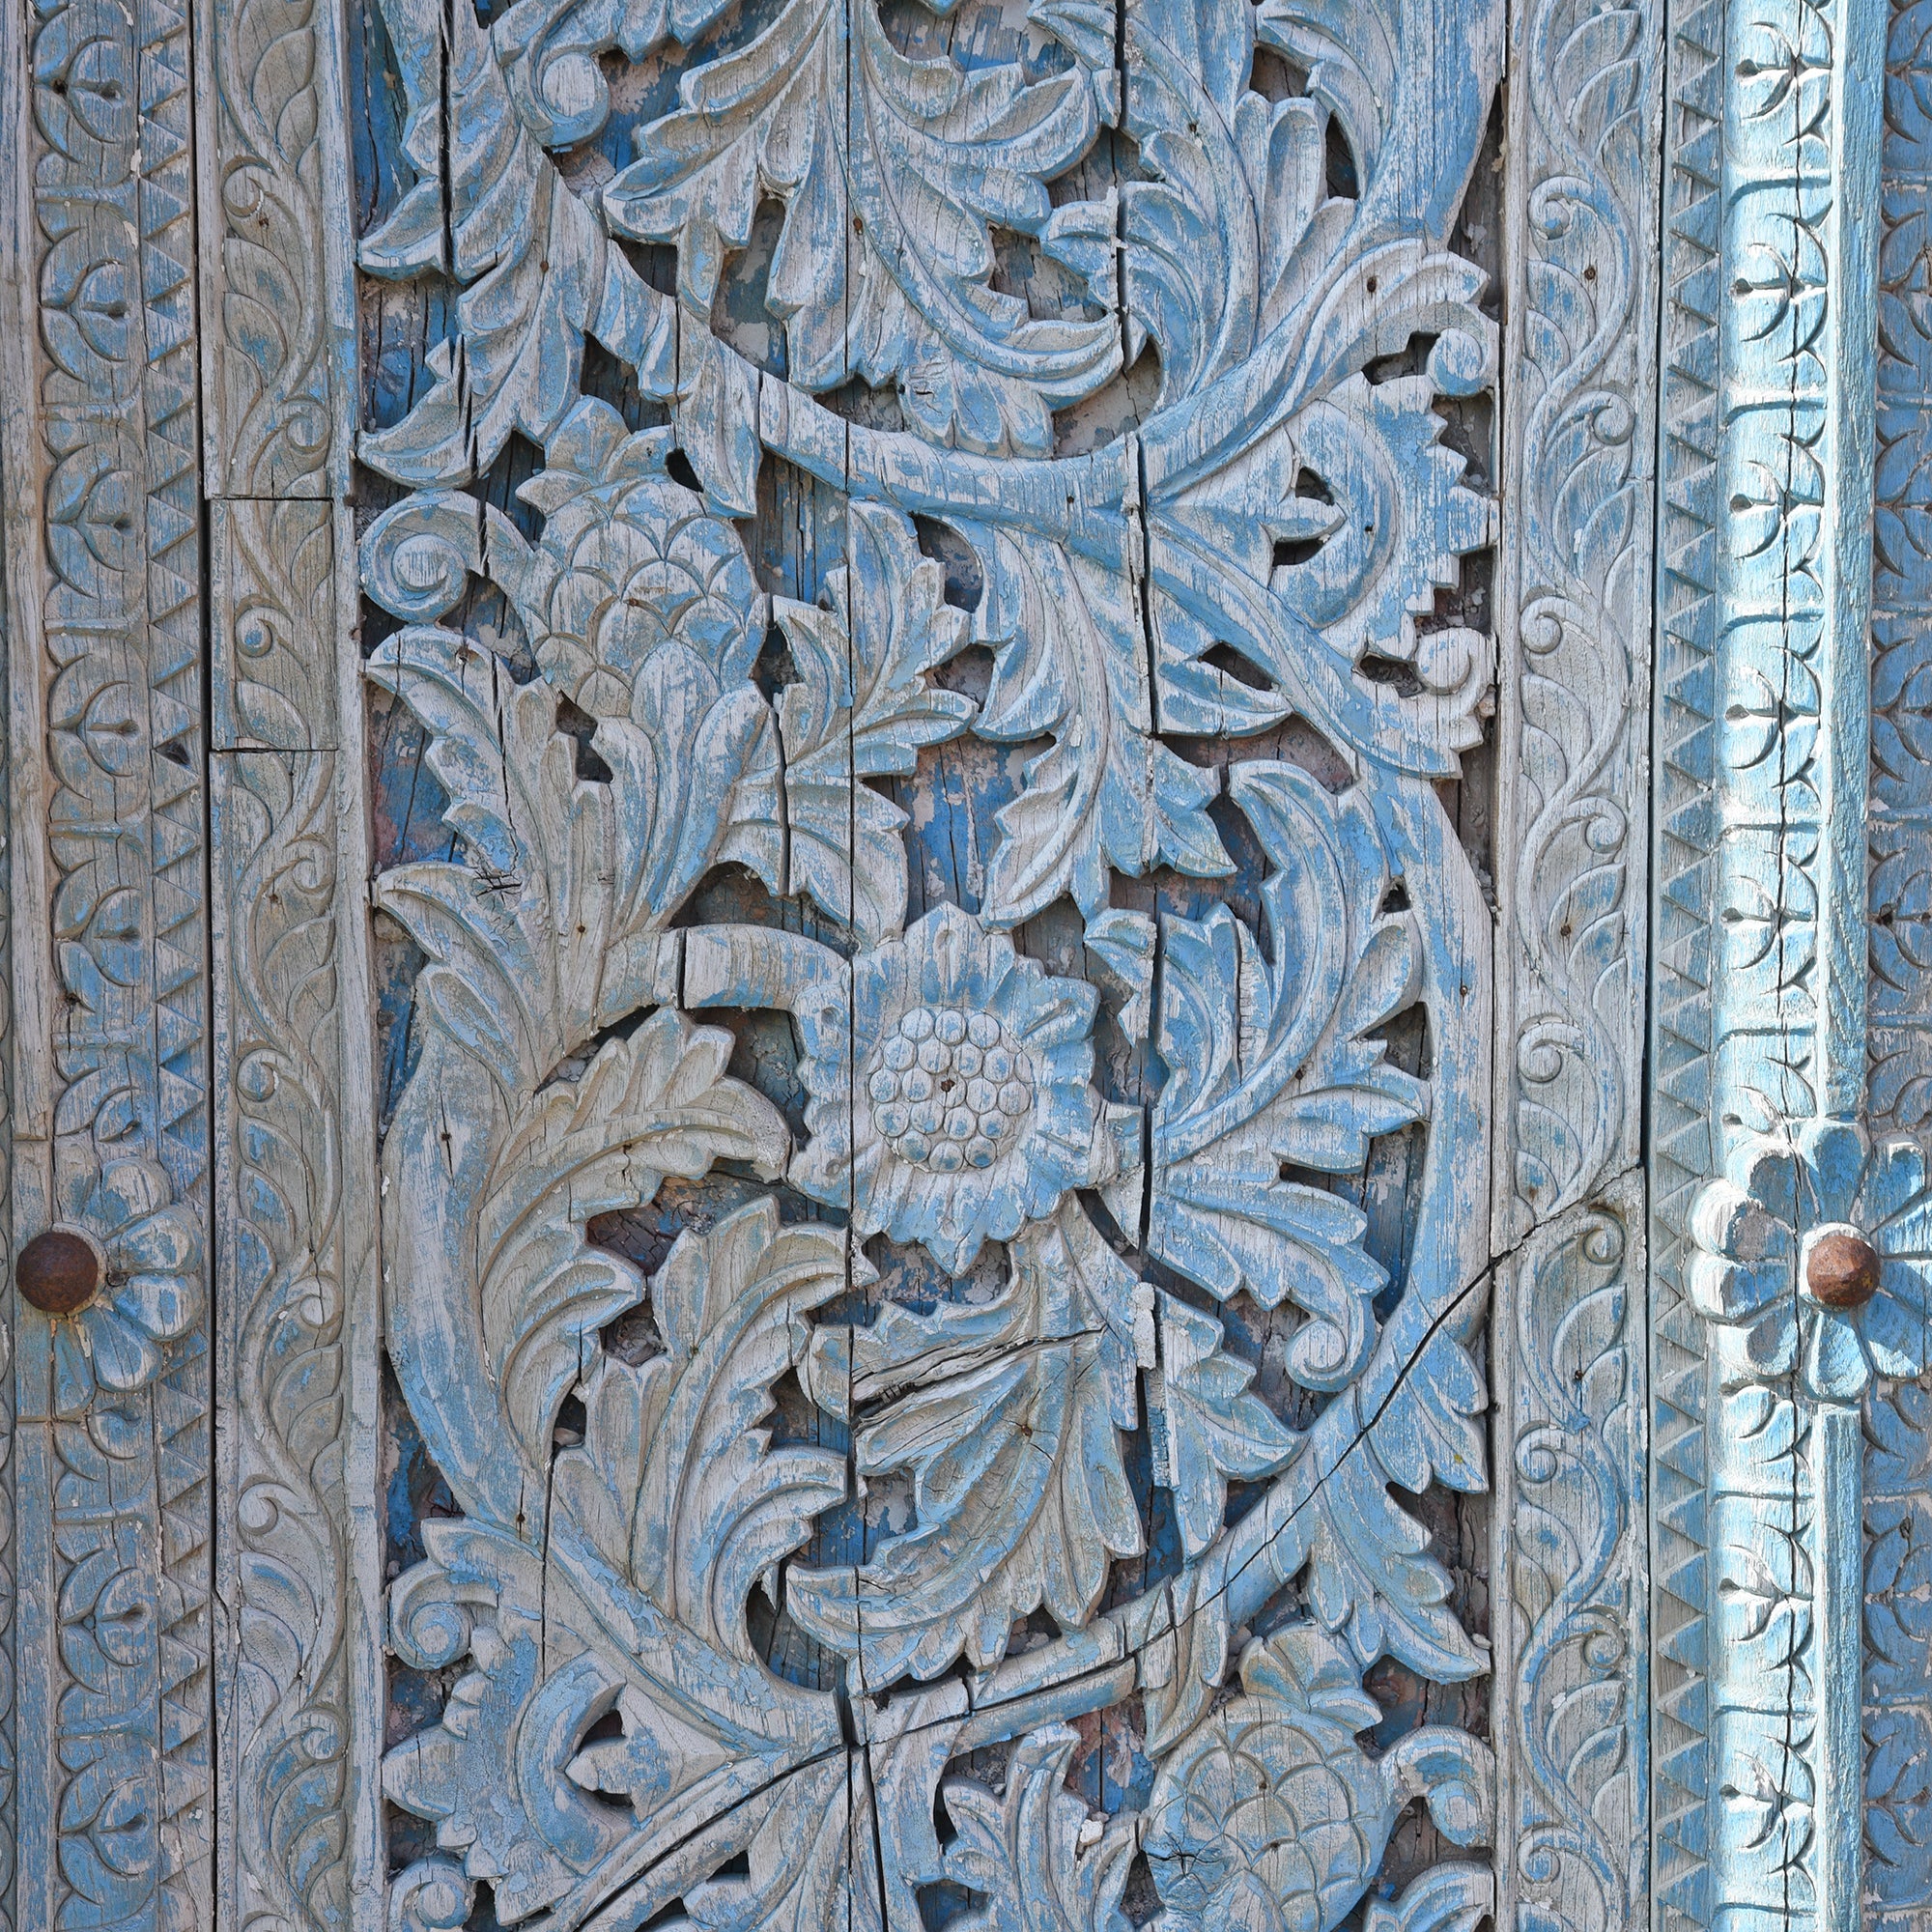 Carved Teak Doors & Frame - 19thC | INDIGO ANTIQUES